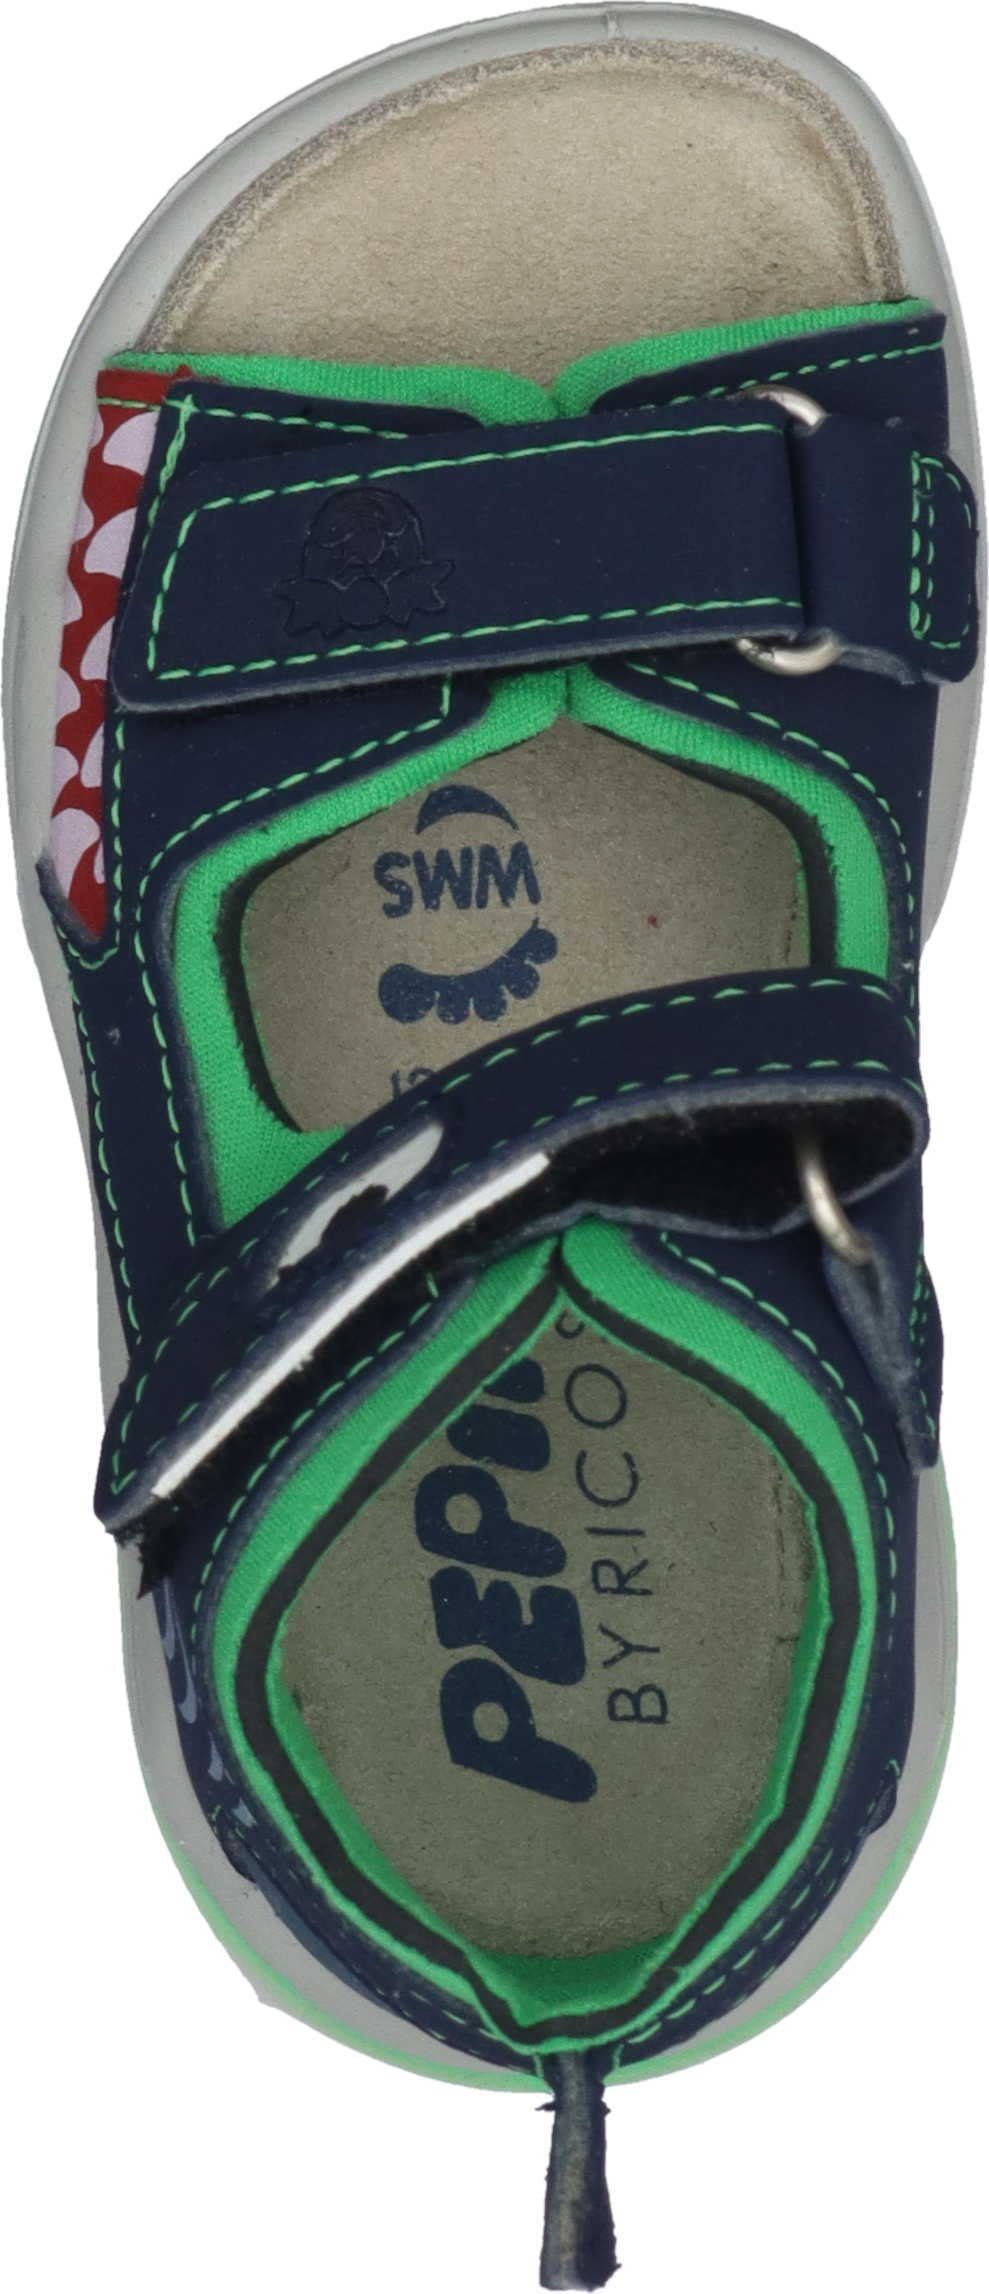 Pepino Textil Sandaletten blau aus Outdoorsandale